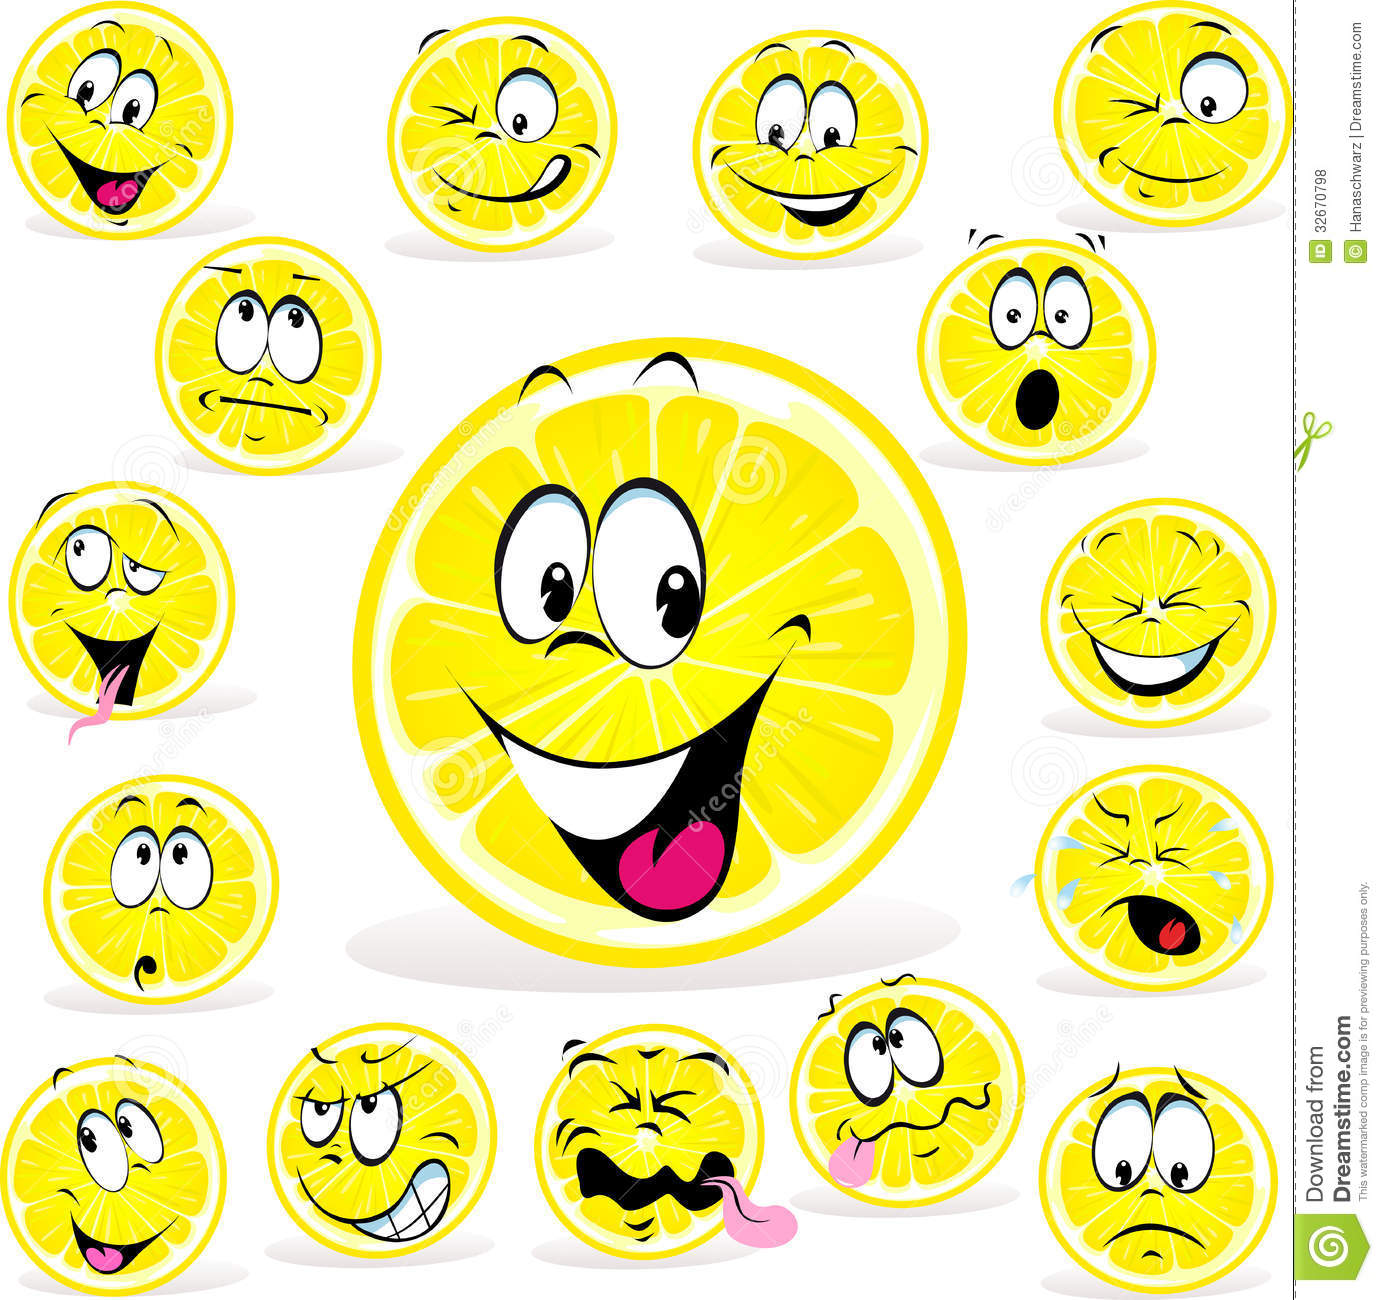 Lemon Cartoon With Many Expressions Royalty Free Stock Photos   Image